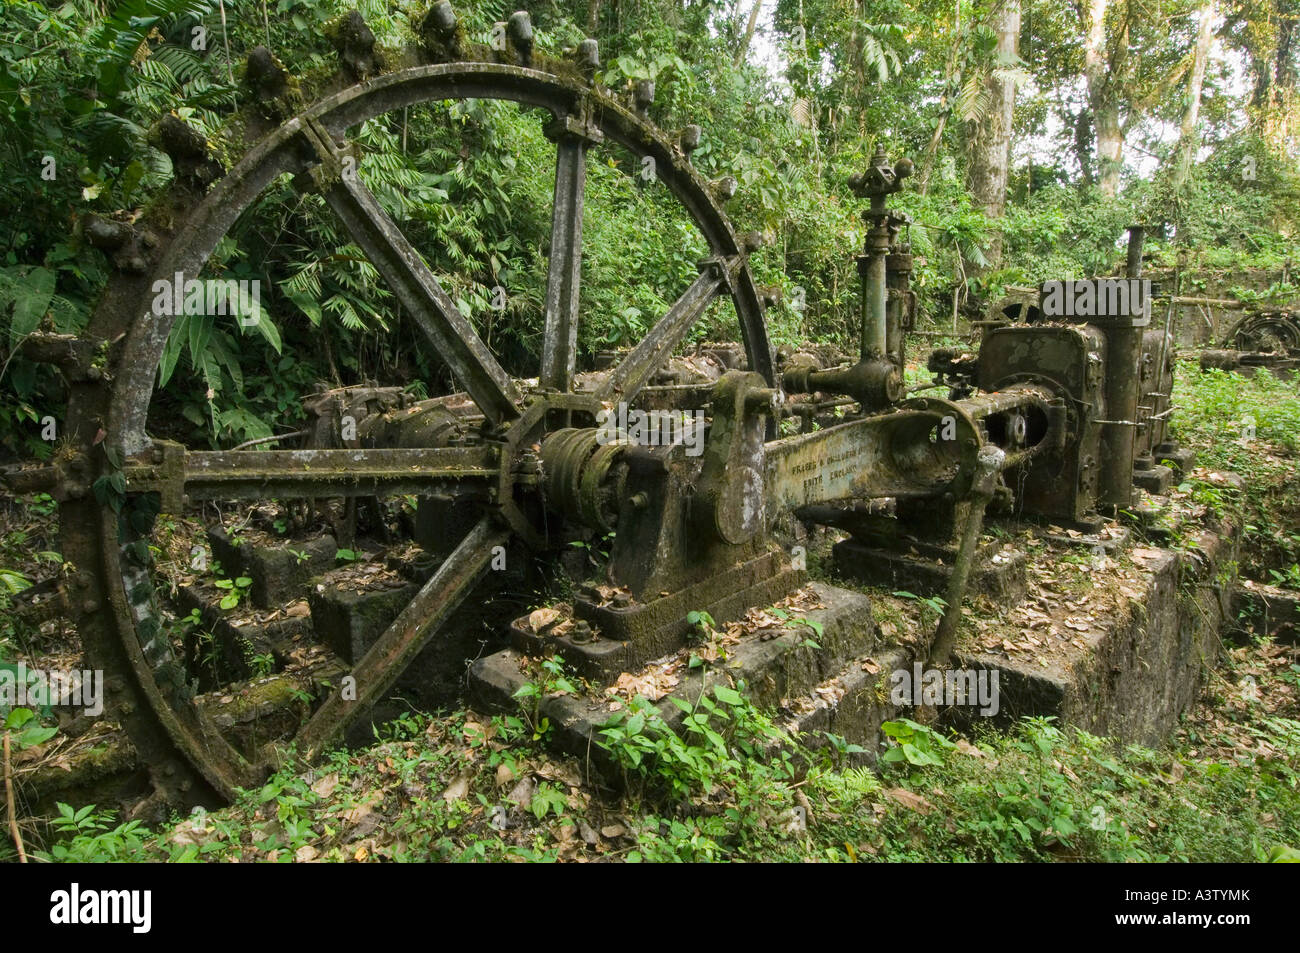 Panama, Parc national du Darien, Cana, ruines d'Espiritu Santo (Saint-Esprit) Or, équipements miniers abandonnés dans la jungle Banque D'Images